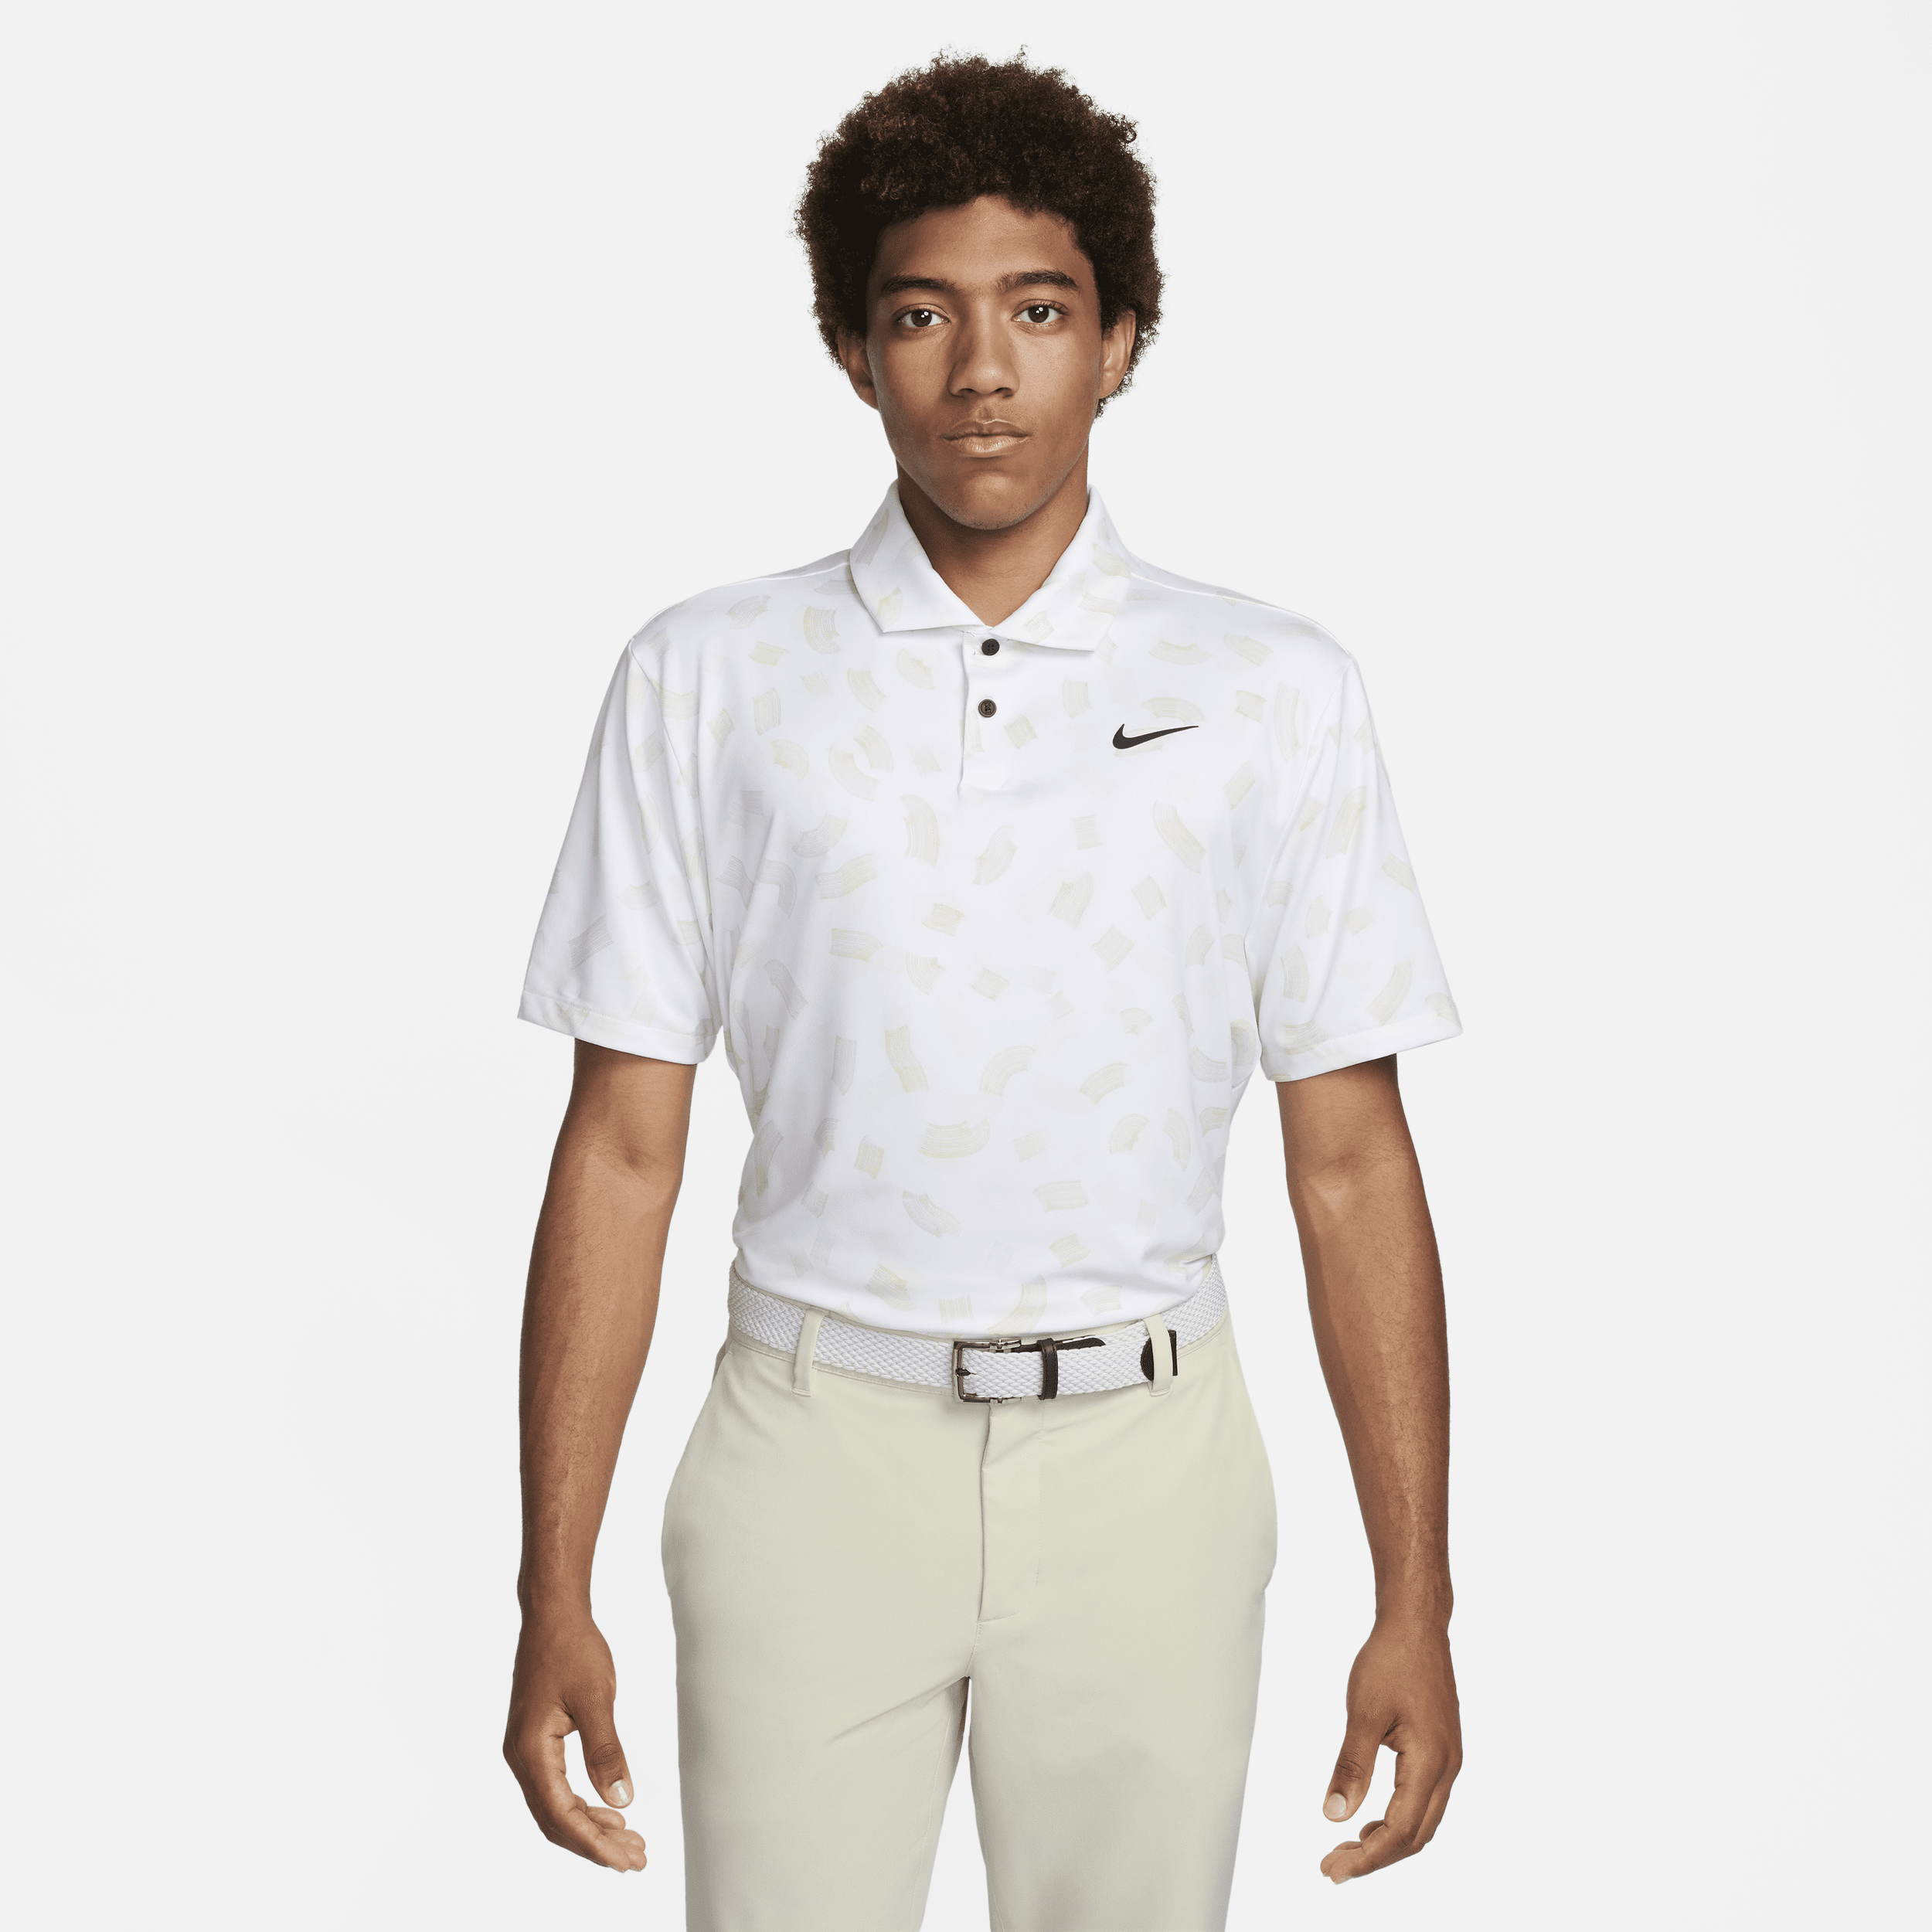 Polo da golf Dri-FIT Nike Tour – Uomo - Bianco